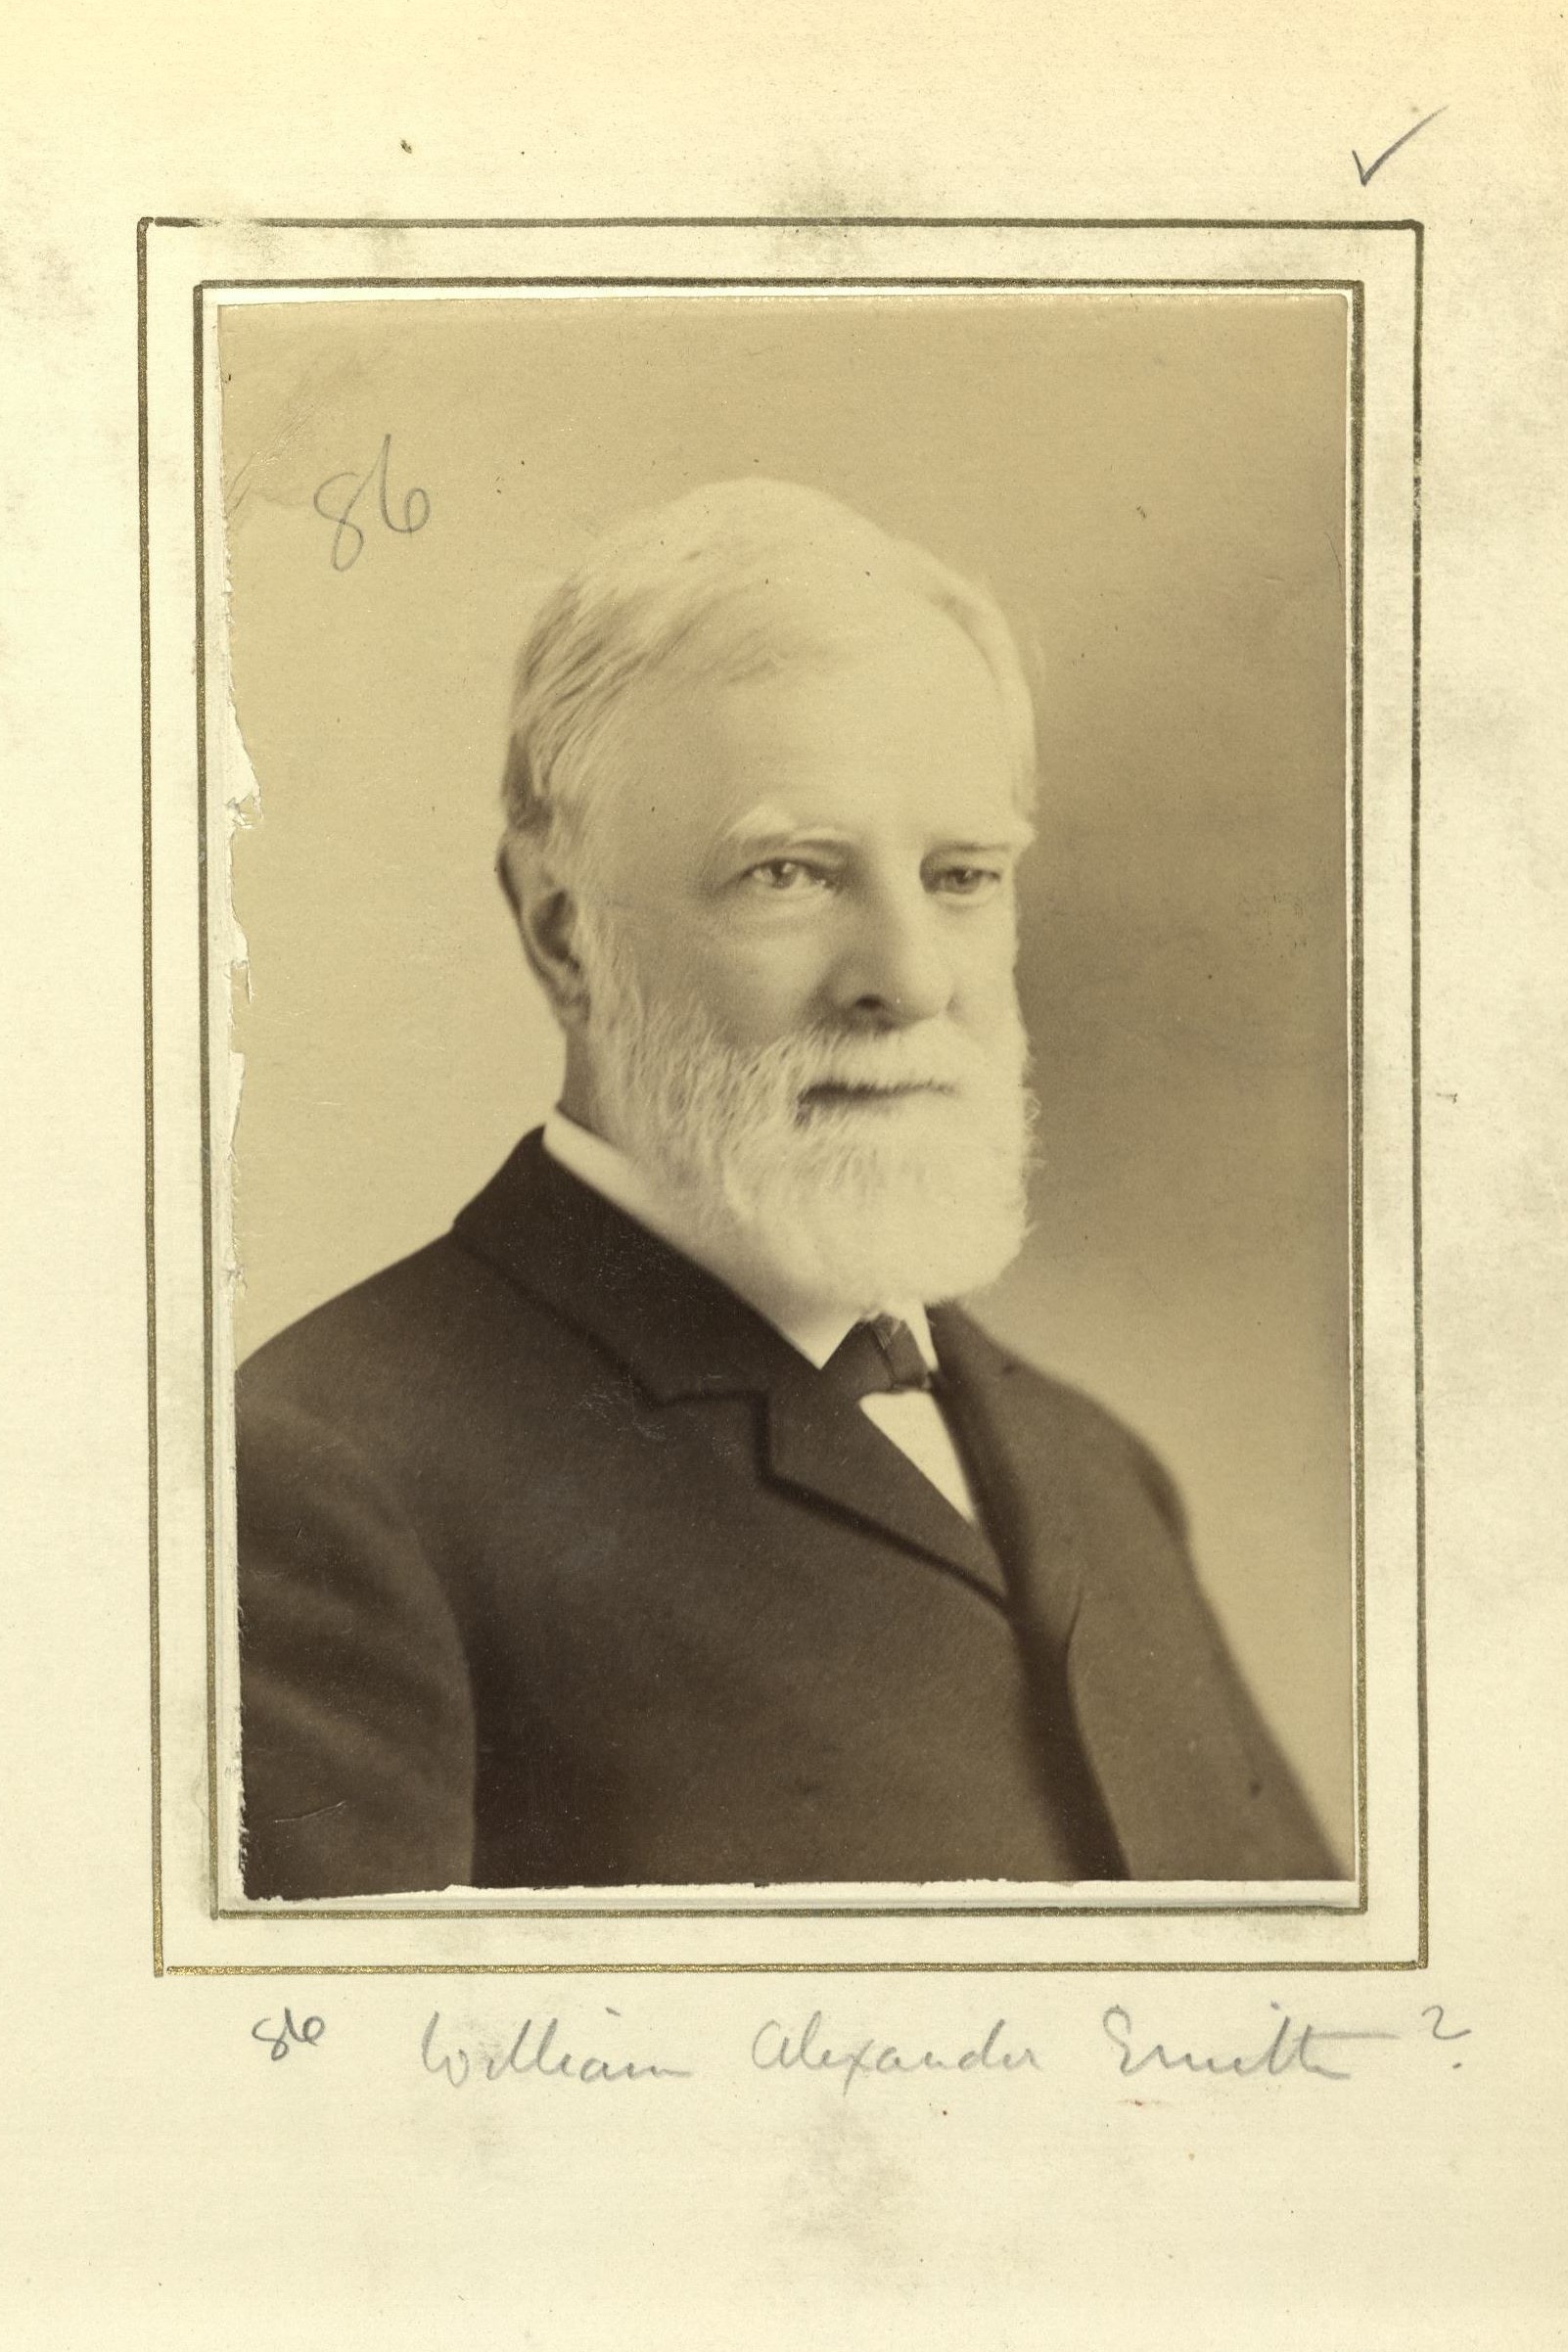 Member portrait of William Alexander Smith